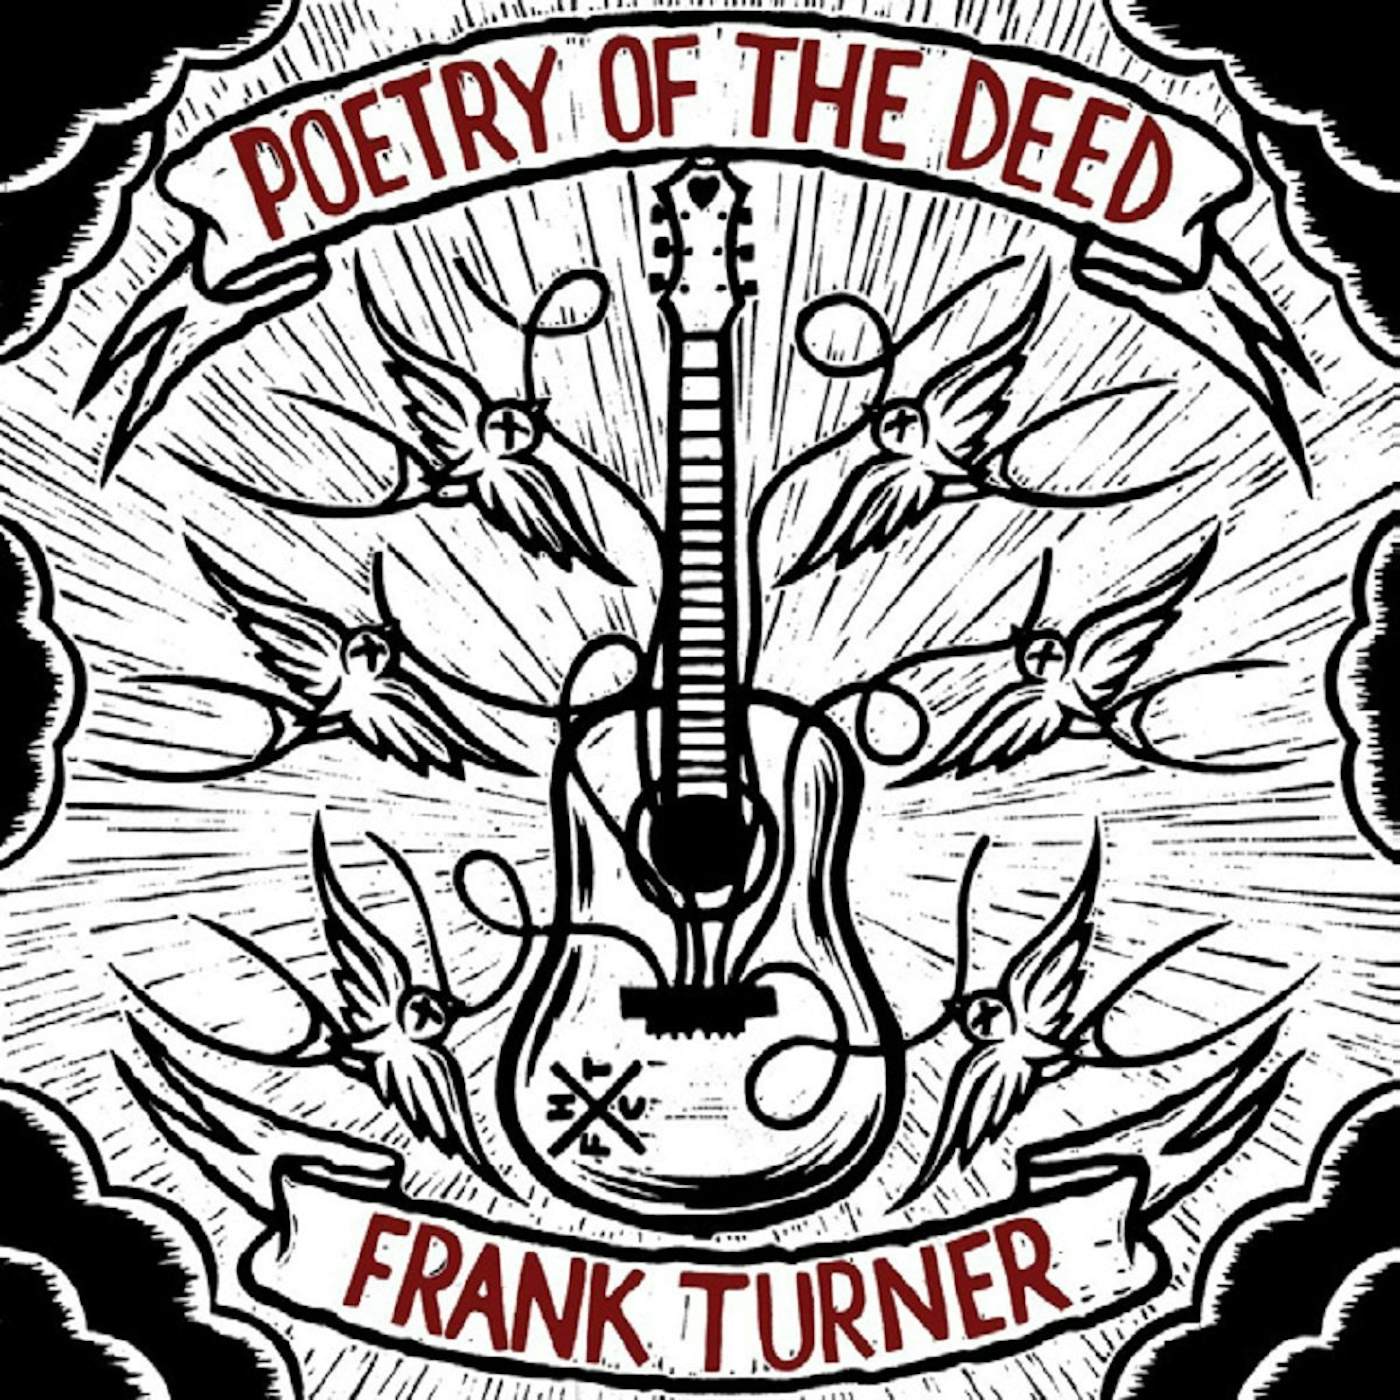 Frank Turner Poetry of the Deed Vinyl Record